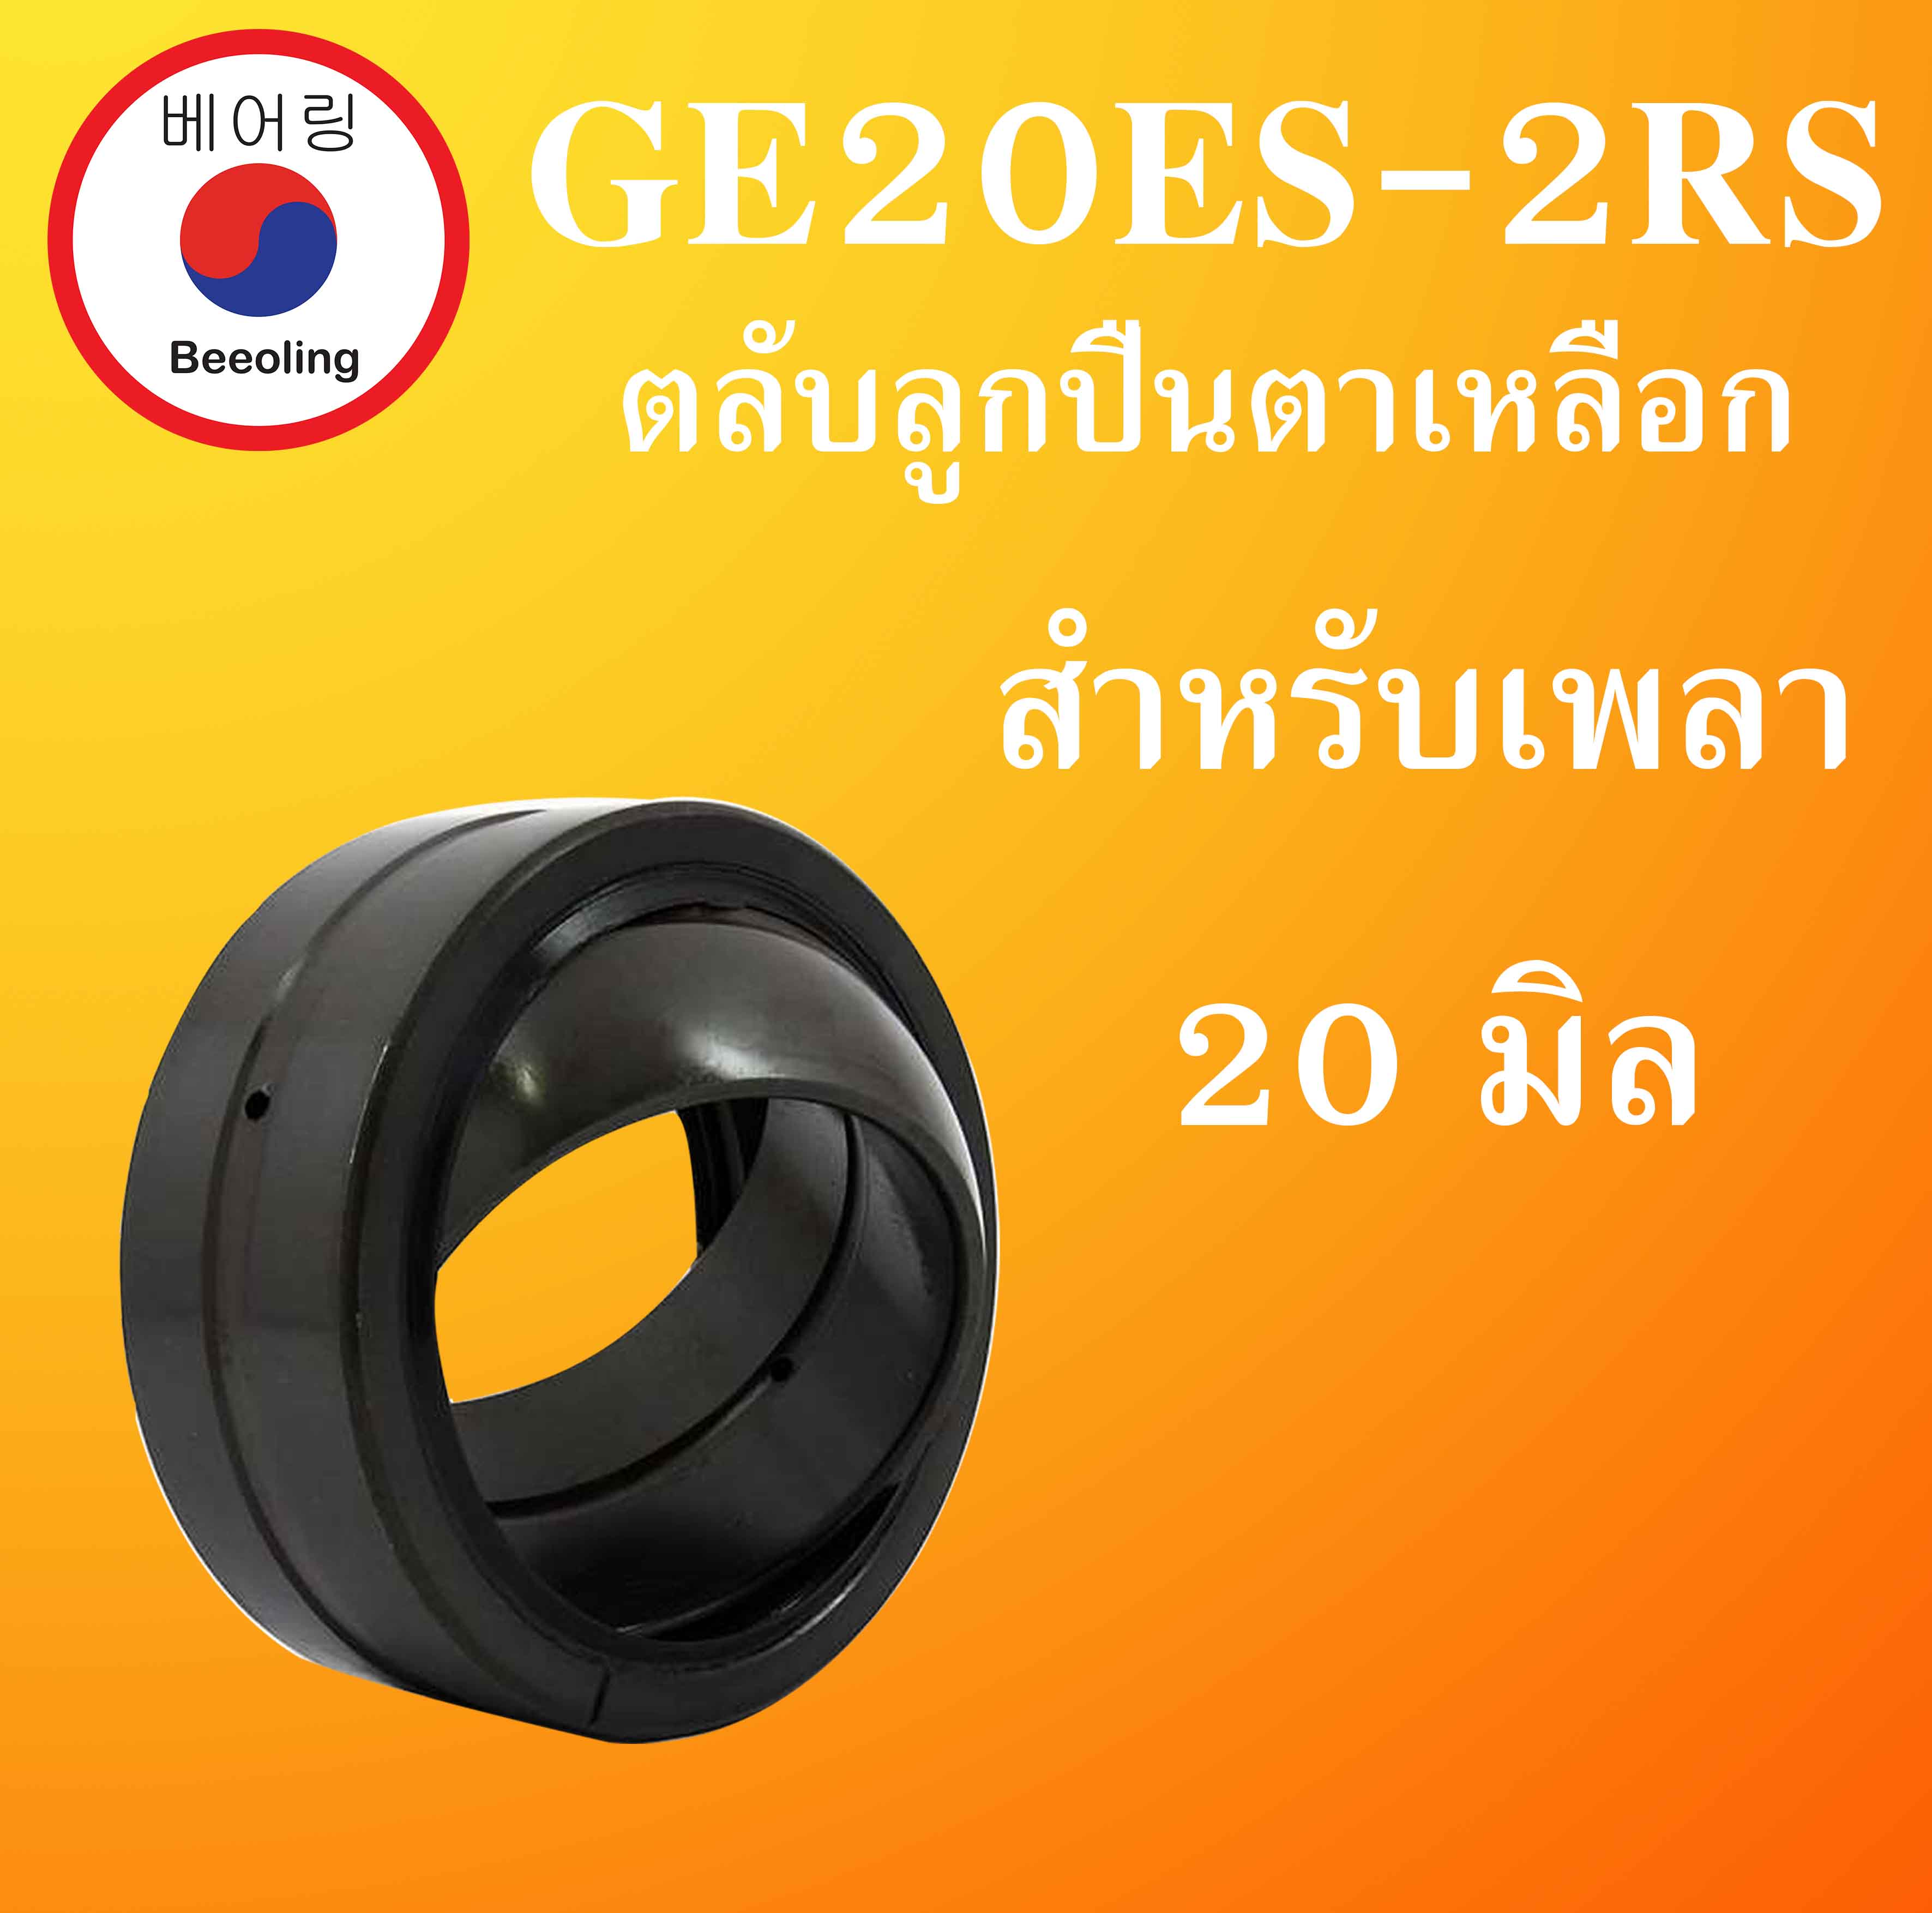 GE20ES-2RS ตลับลูกปืนตาเหลือก มีซีลกันฝุ่น ขนาดเพลา 20 มม. ( Spherical .